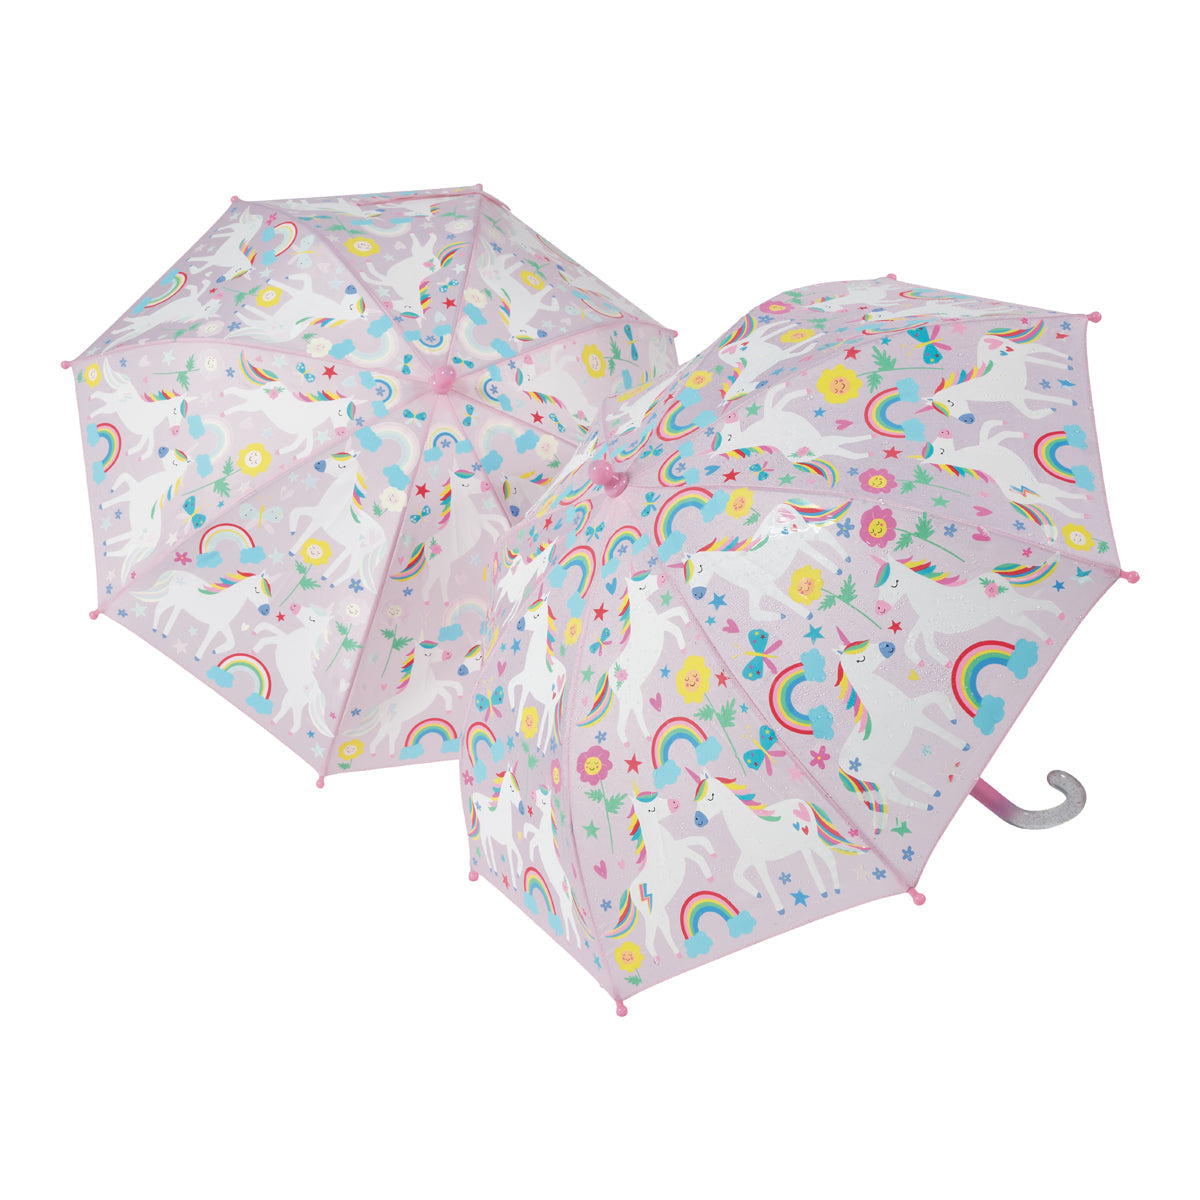 Colour Changing Umbrella - Rainbow Unicorn by Floss & Rock